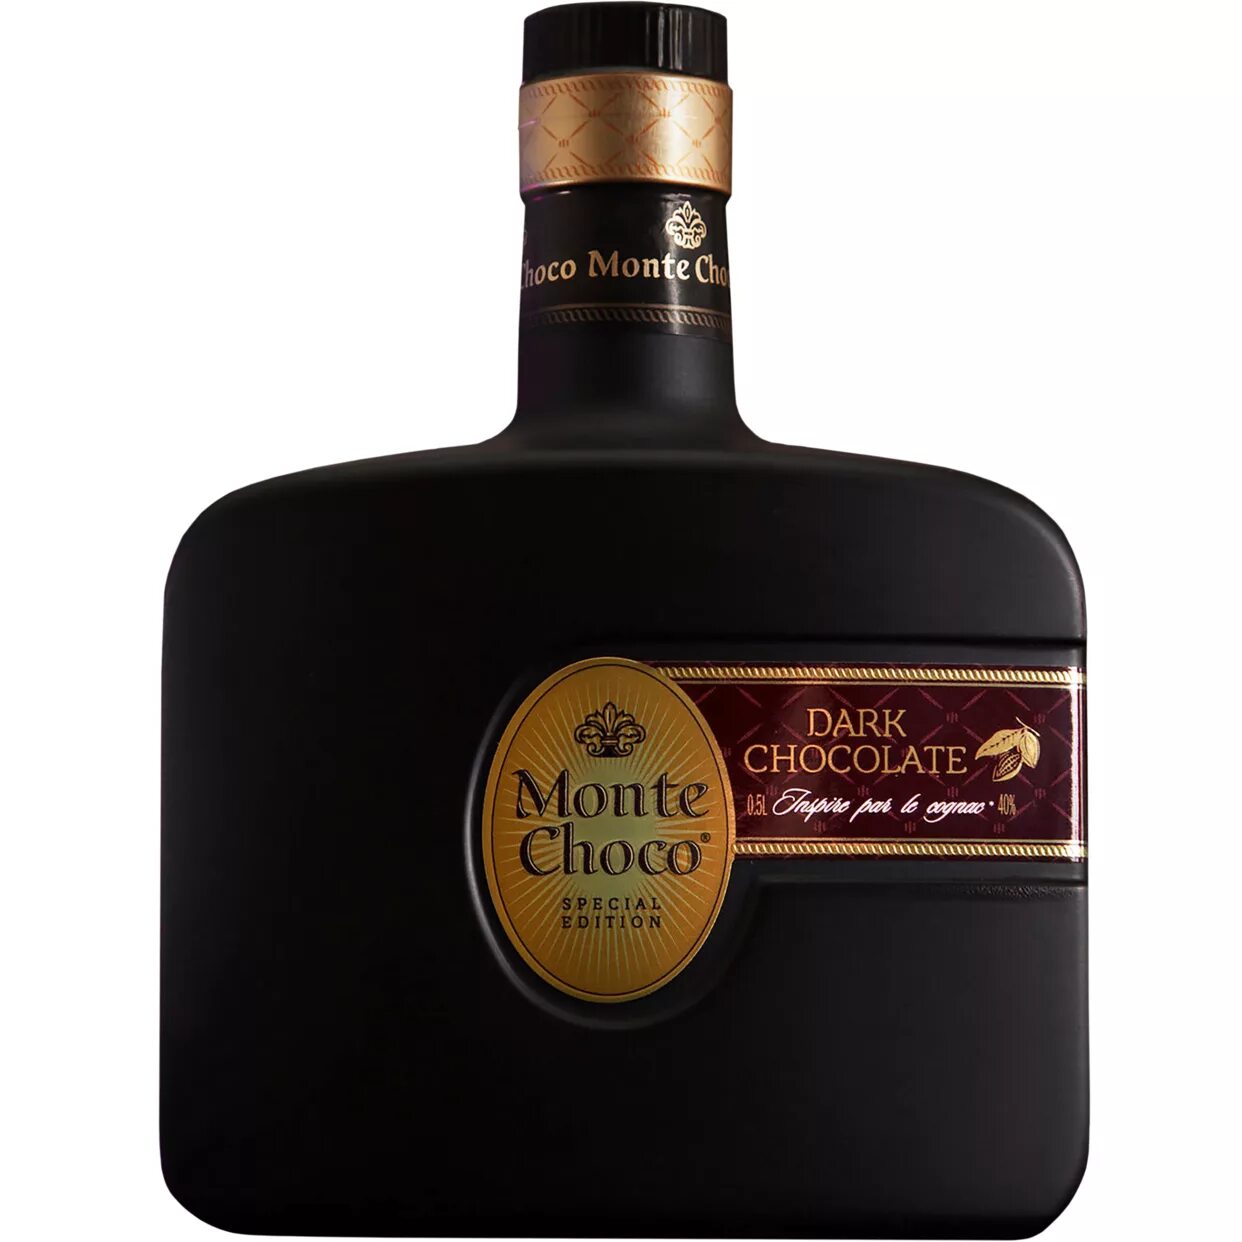 Монте Чоко дарк чоколате. "Monte Choco" Dark Chocolate, 0.5 л. Кокт.Monte.Choco Dark Chocolate 40% 0.5. Коньяк Monte Choco Dark Chocolate. Коктейль monte choco